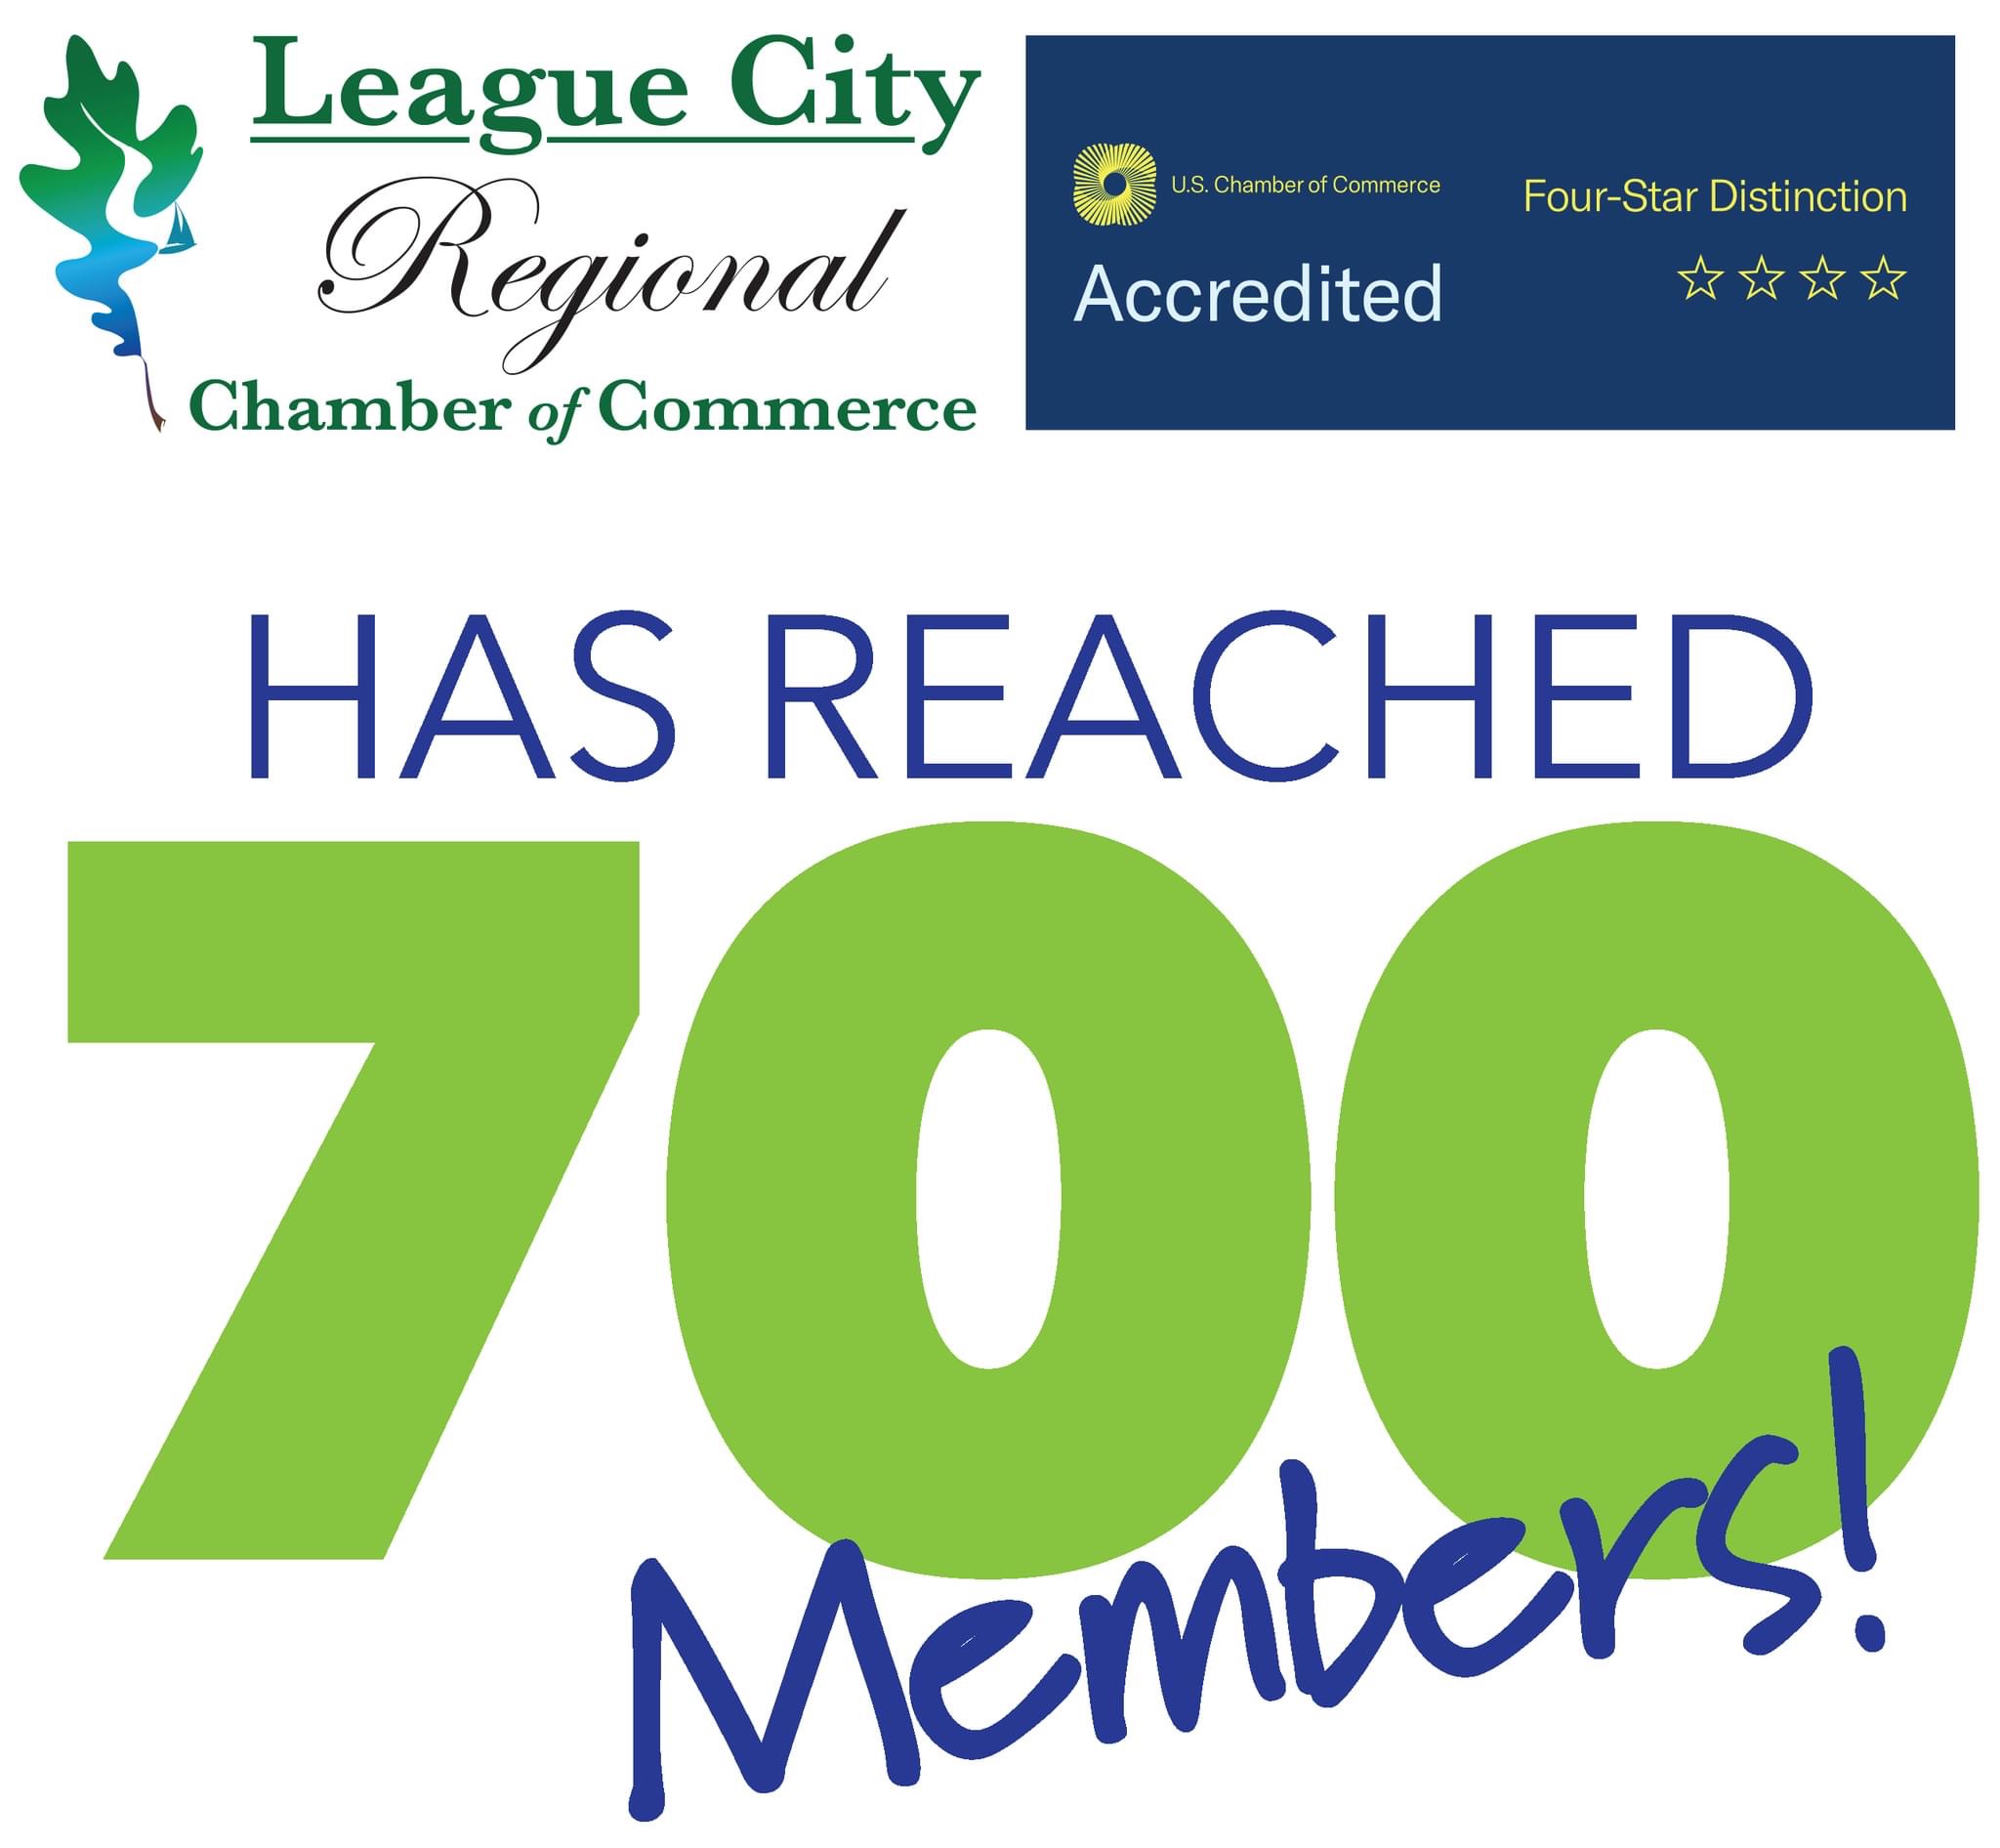 League City Regional Chamber reaches 700 members!